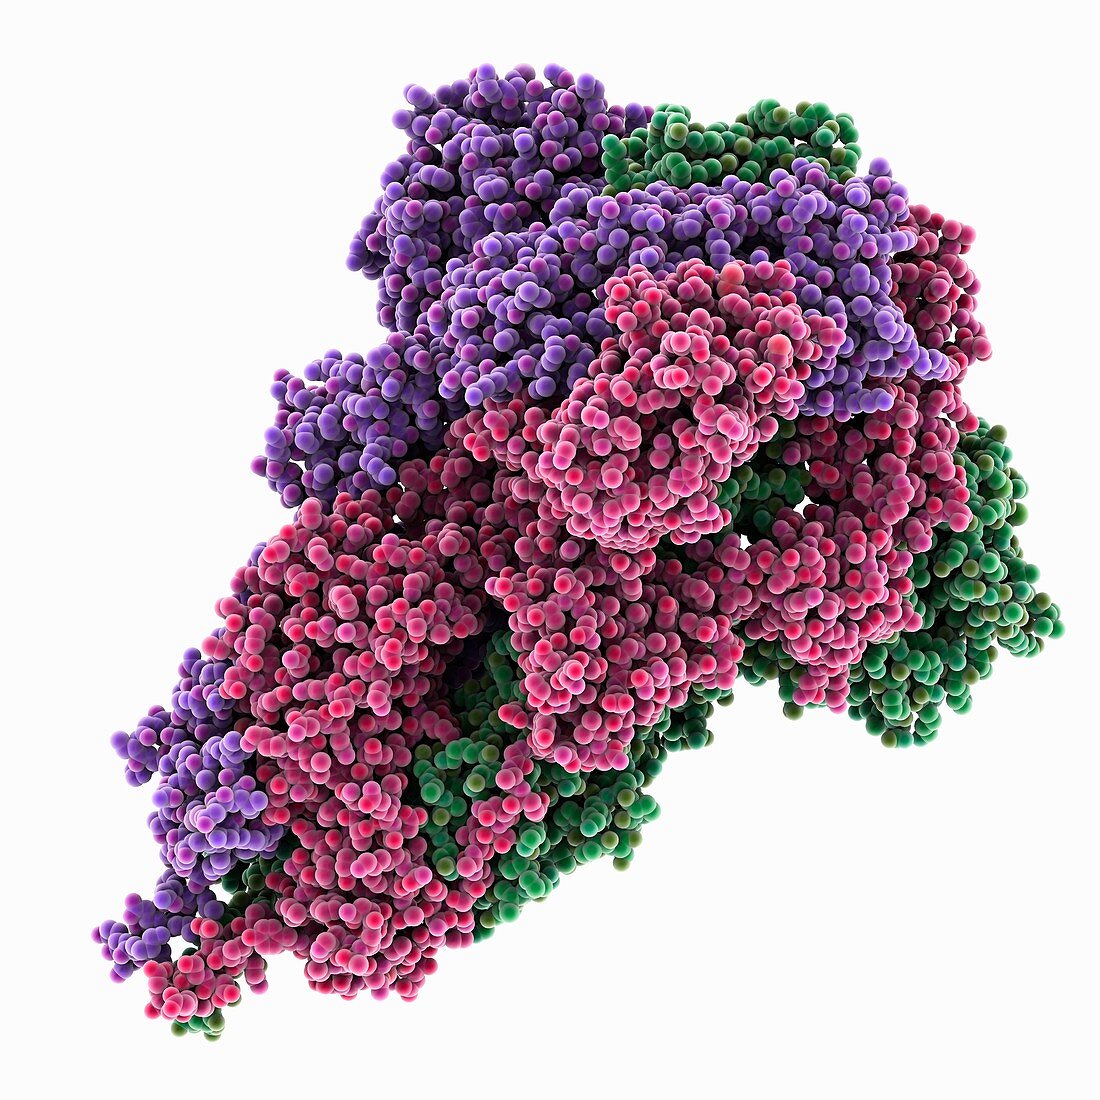 SARS-CoV-2 spike proteins, illustration